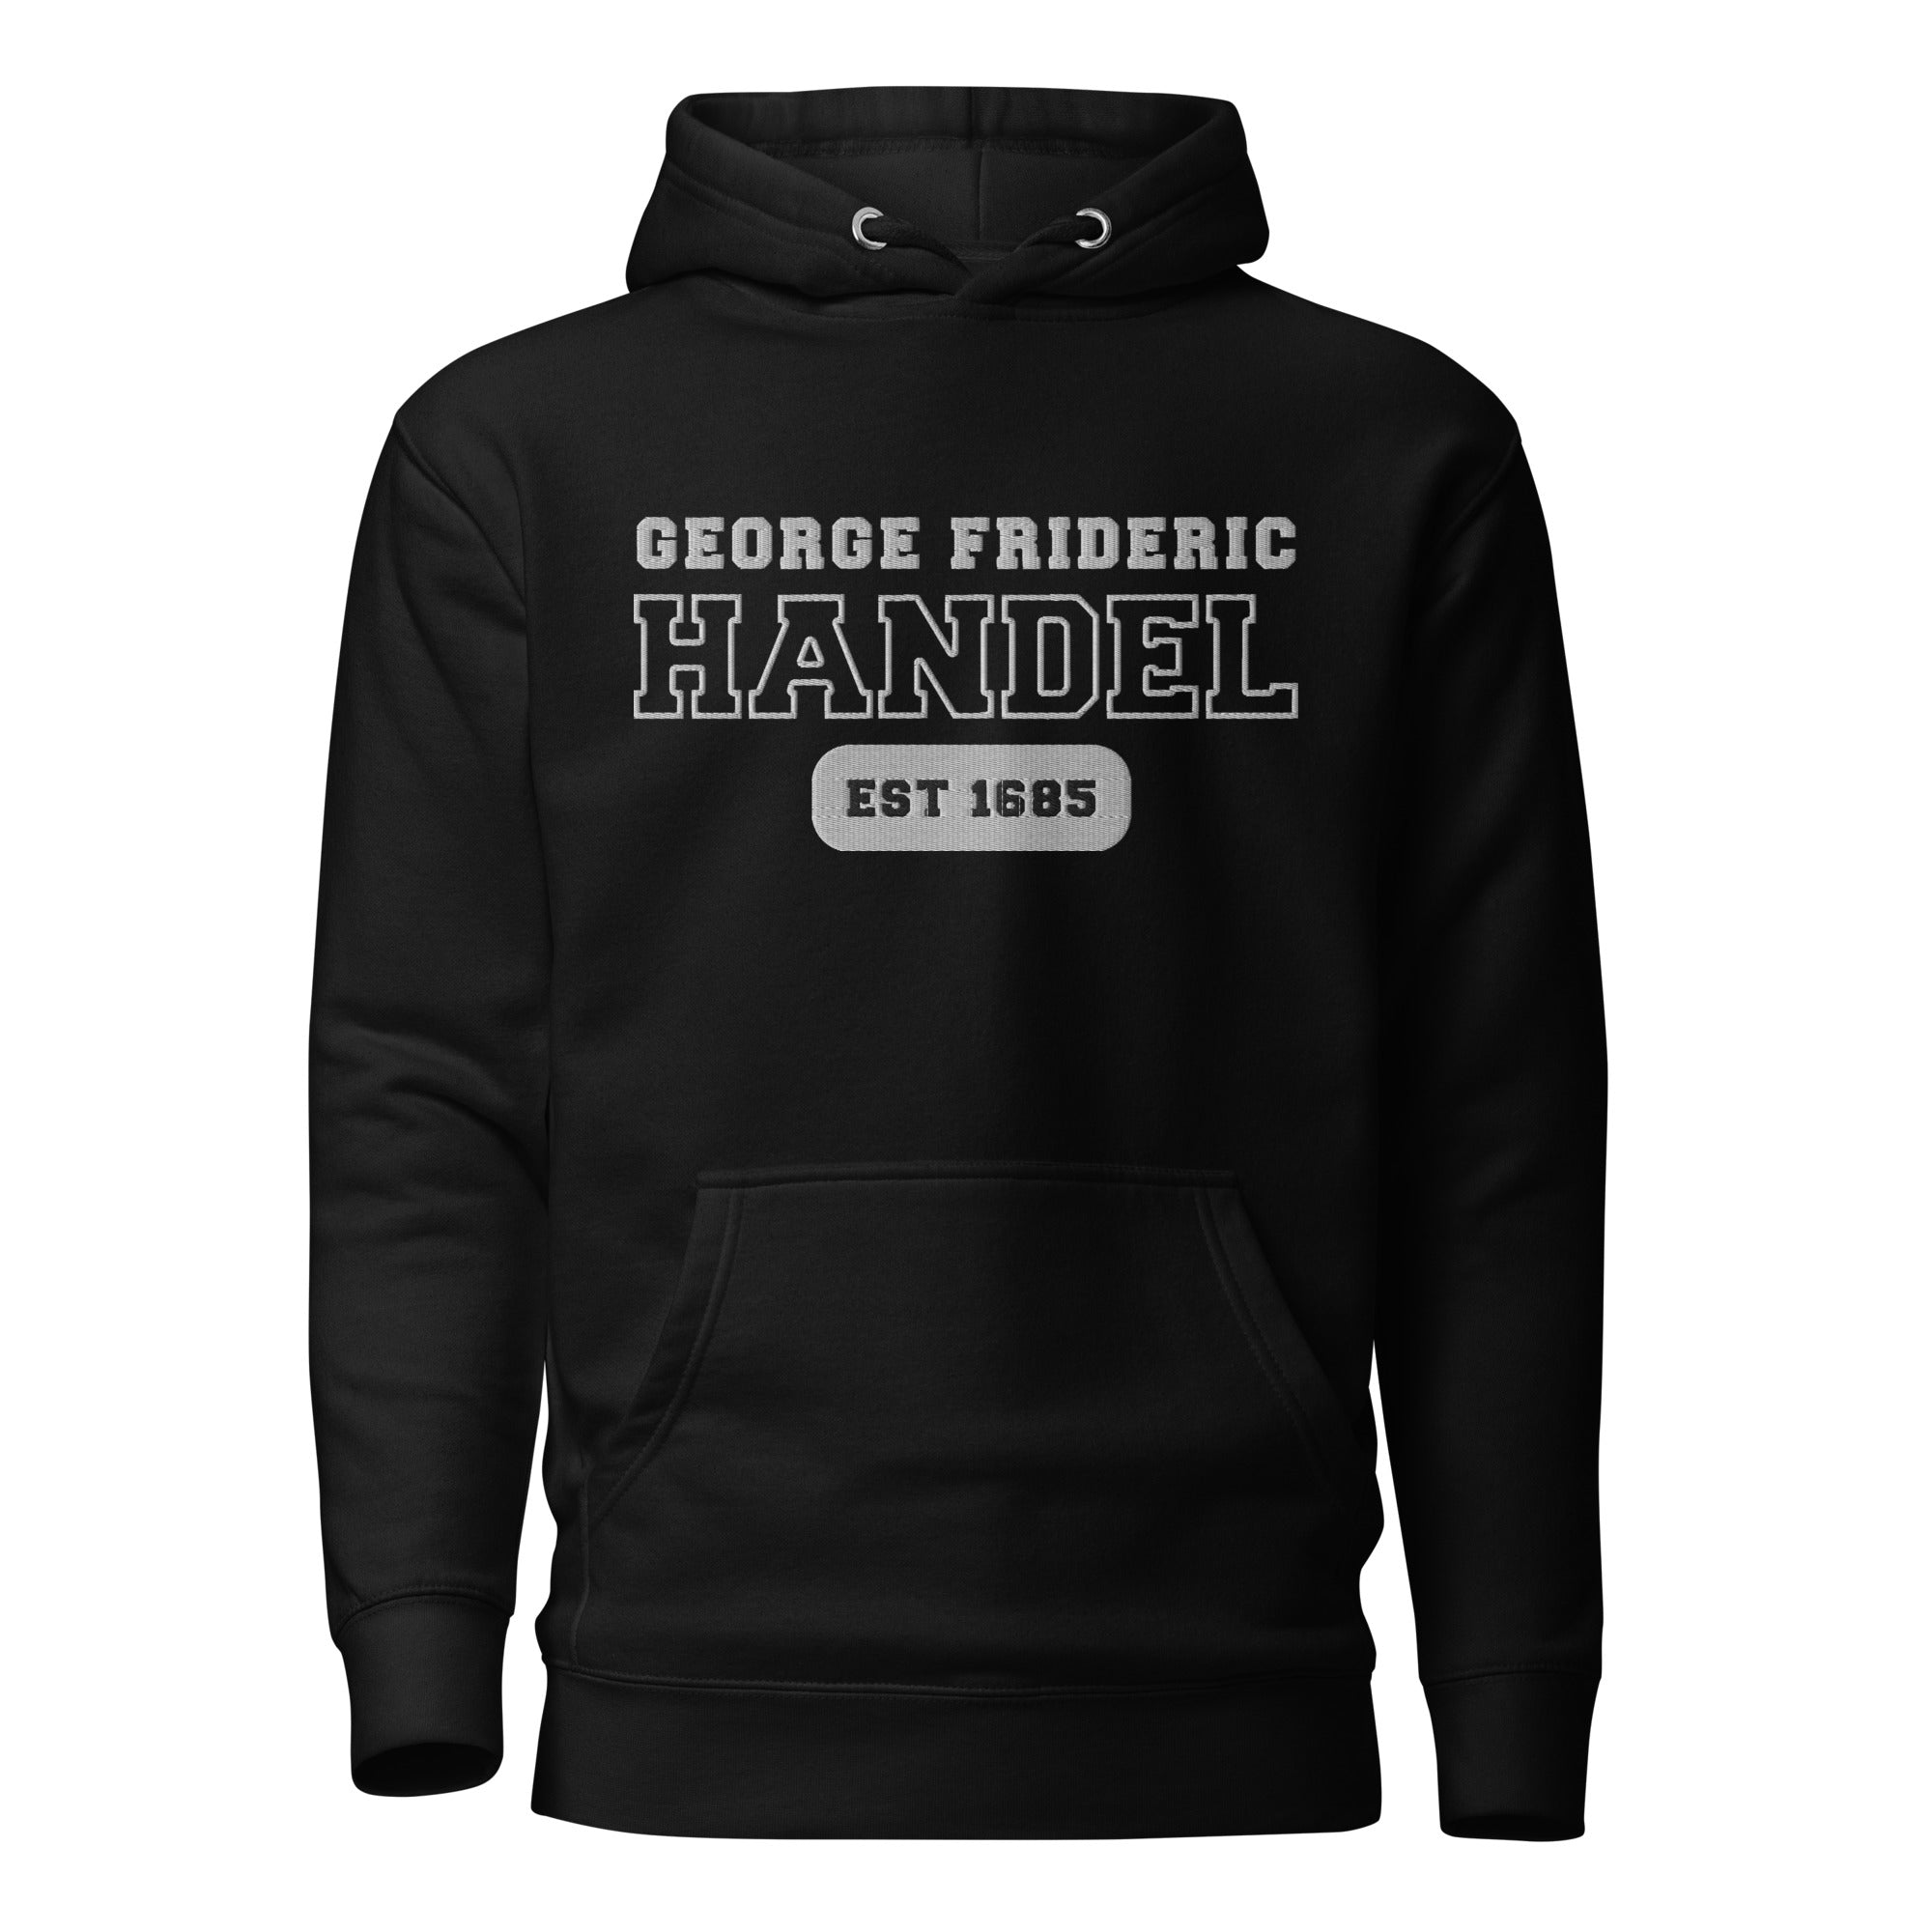 George Frideric Handel - Premium US College Style Hoodie